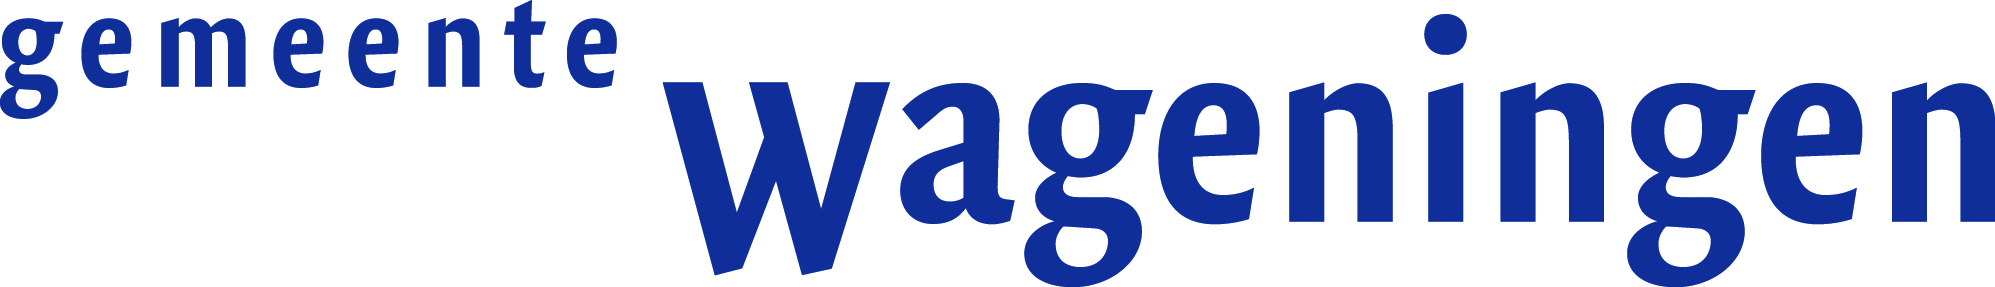 Gemeente Wageningen Logo